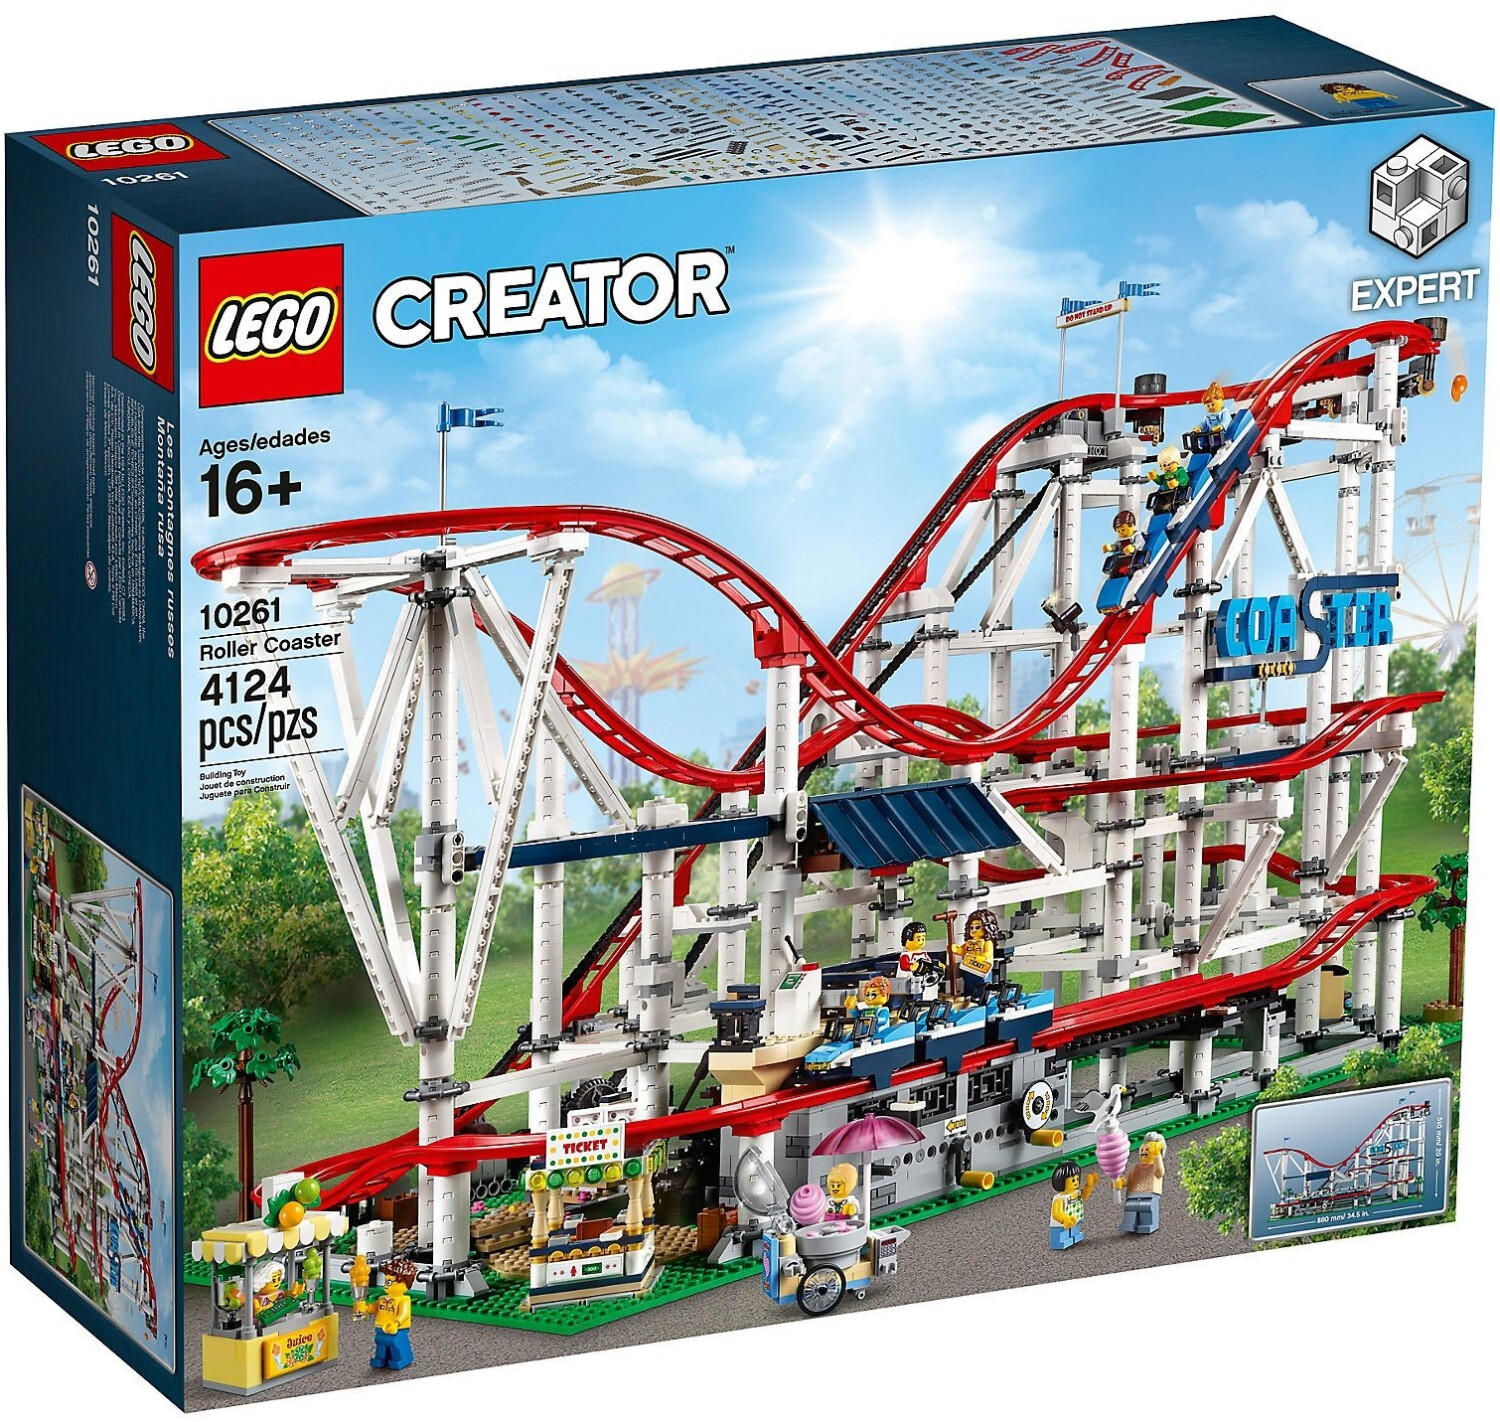 LEGO Creator - Roller Coaster (10261)